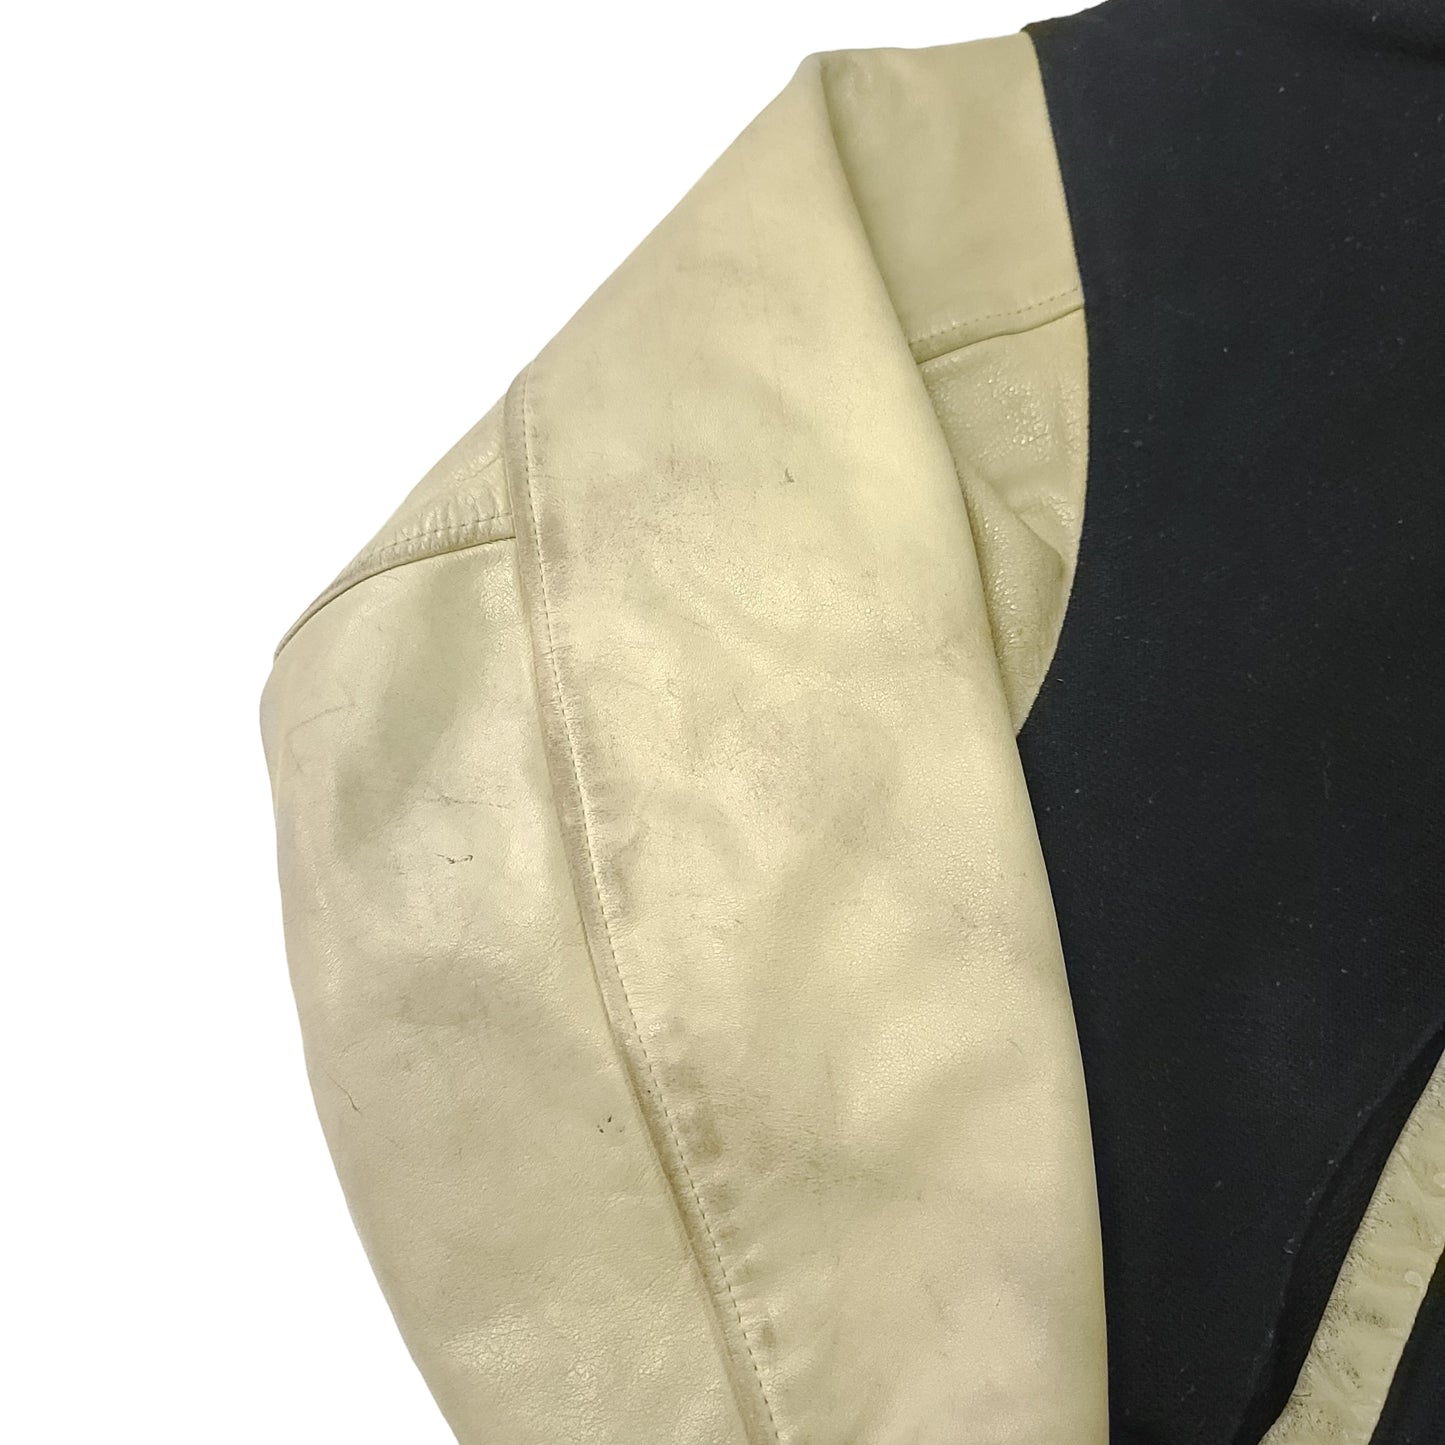 Vintage Chicago Bulls Nike Leather & Wool Letterman Jacket